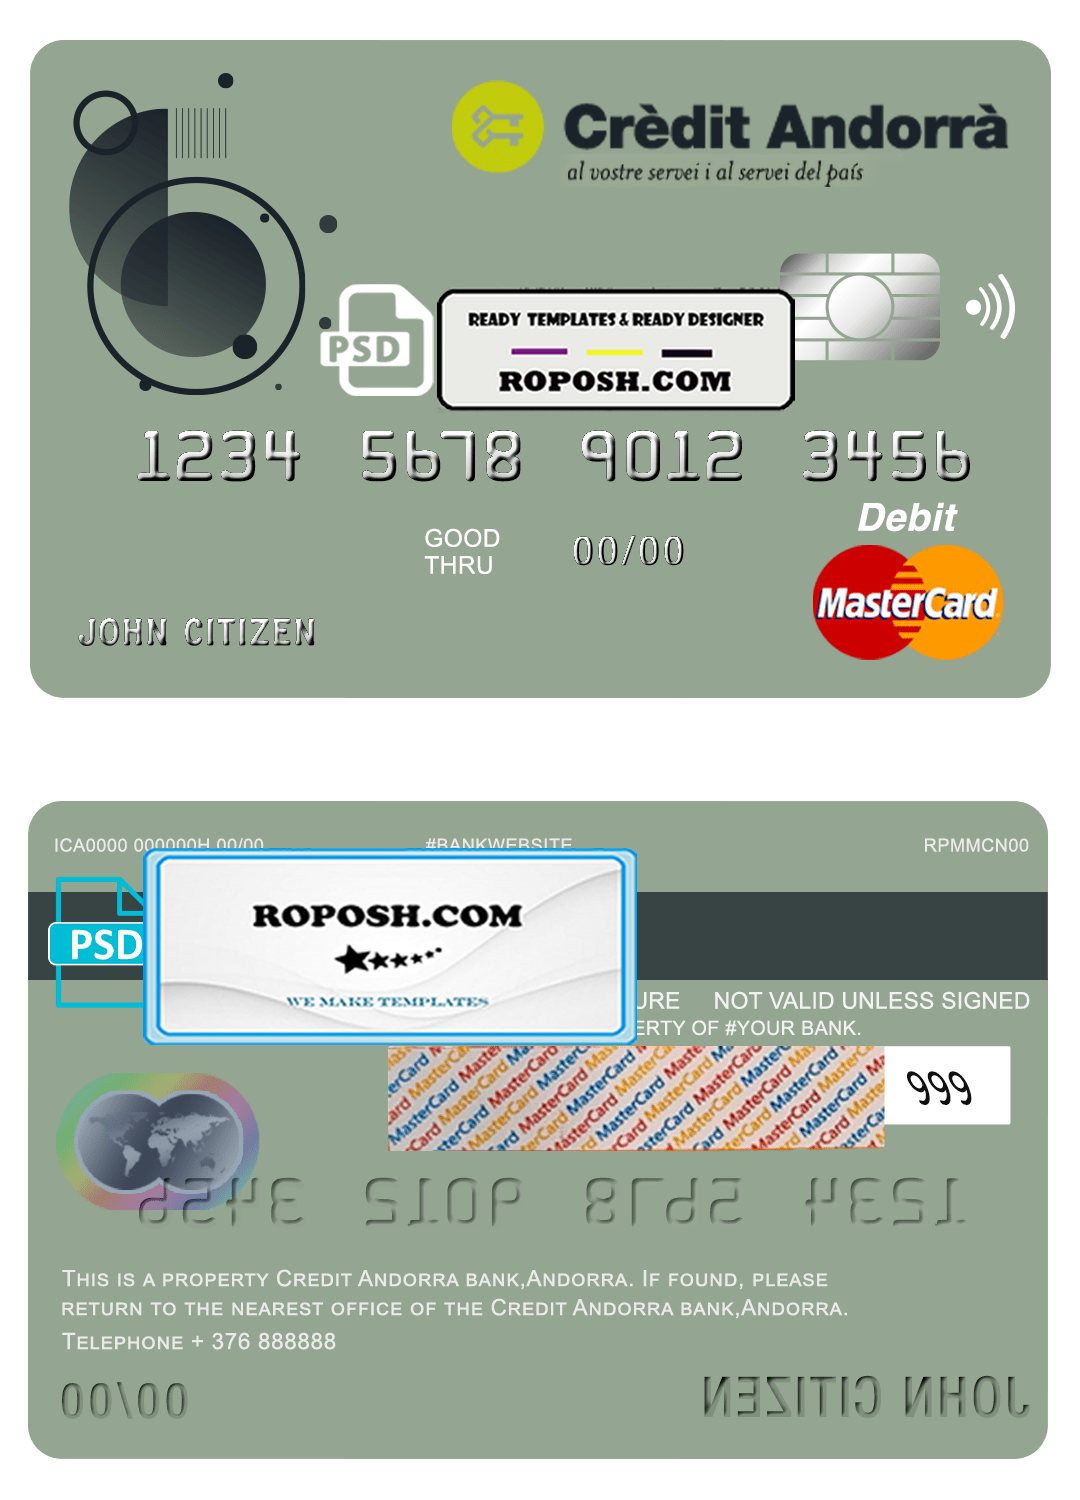 Andorra Credit Andorra bank mastercard debit card template in PSD ...